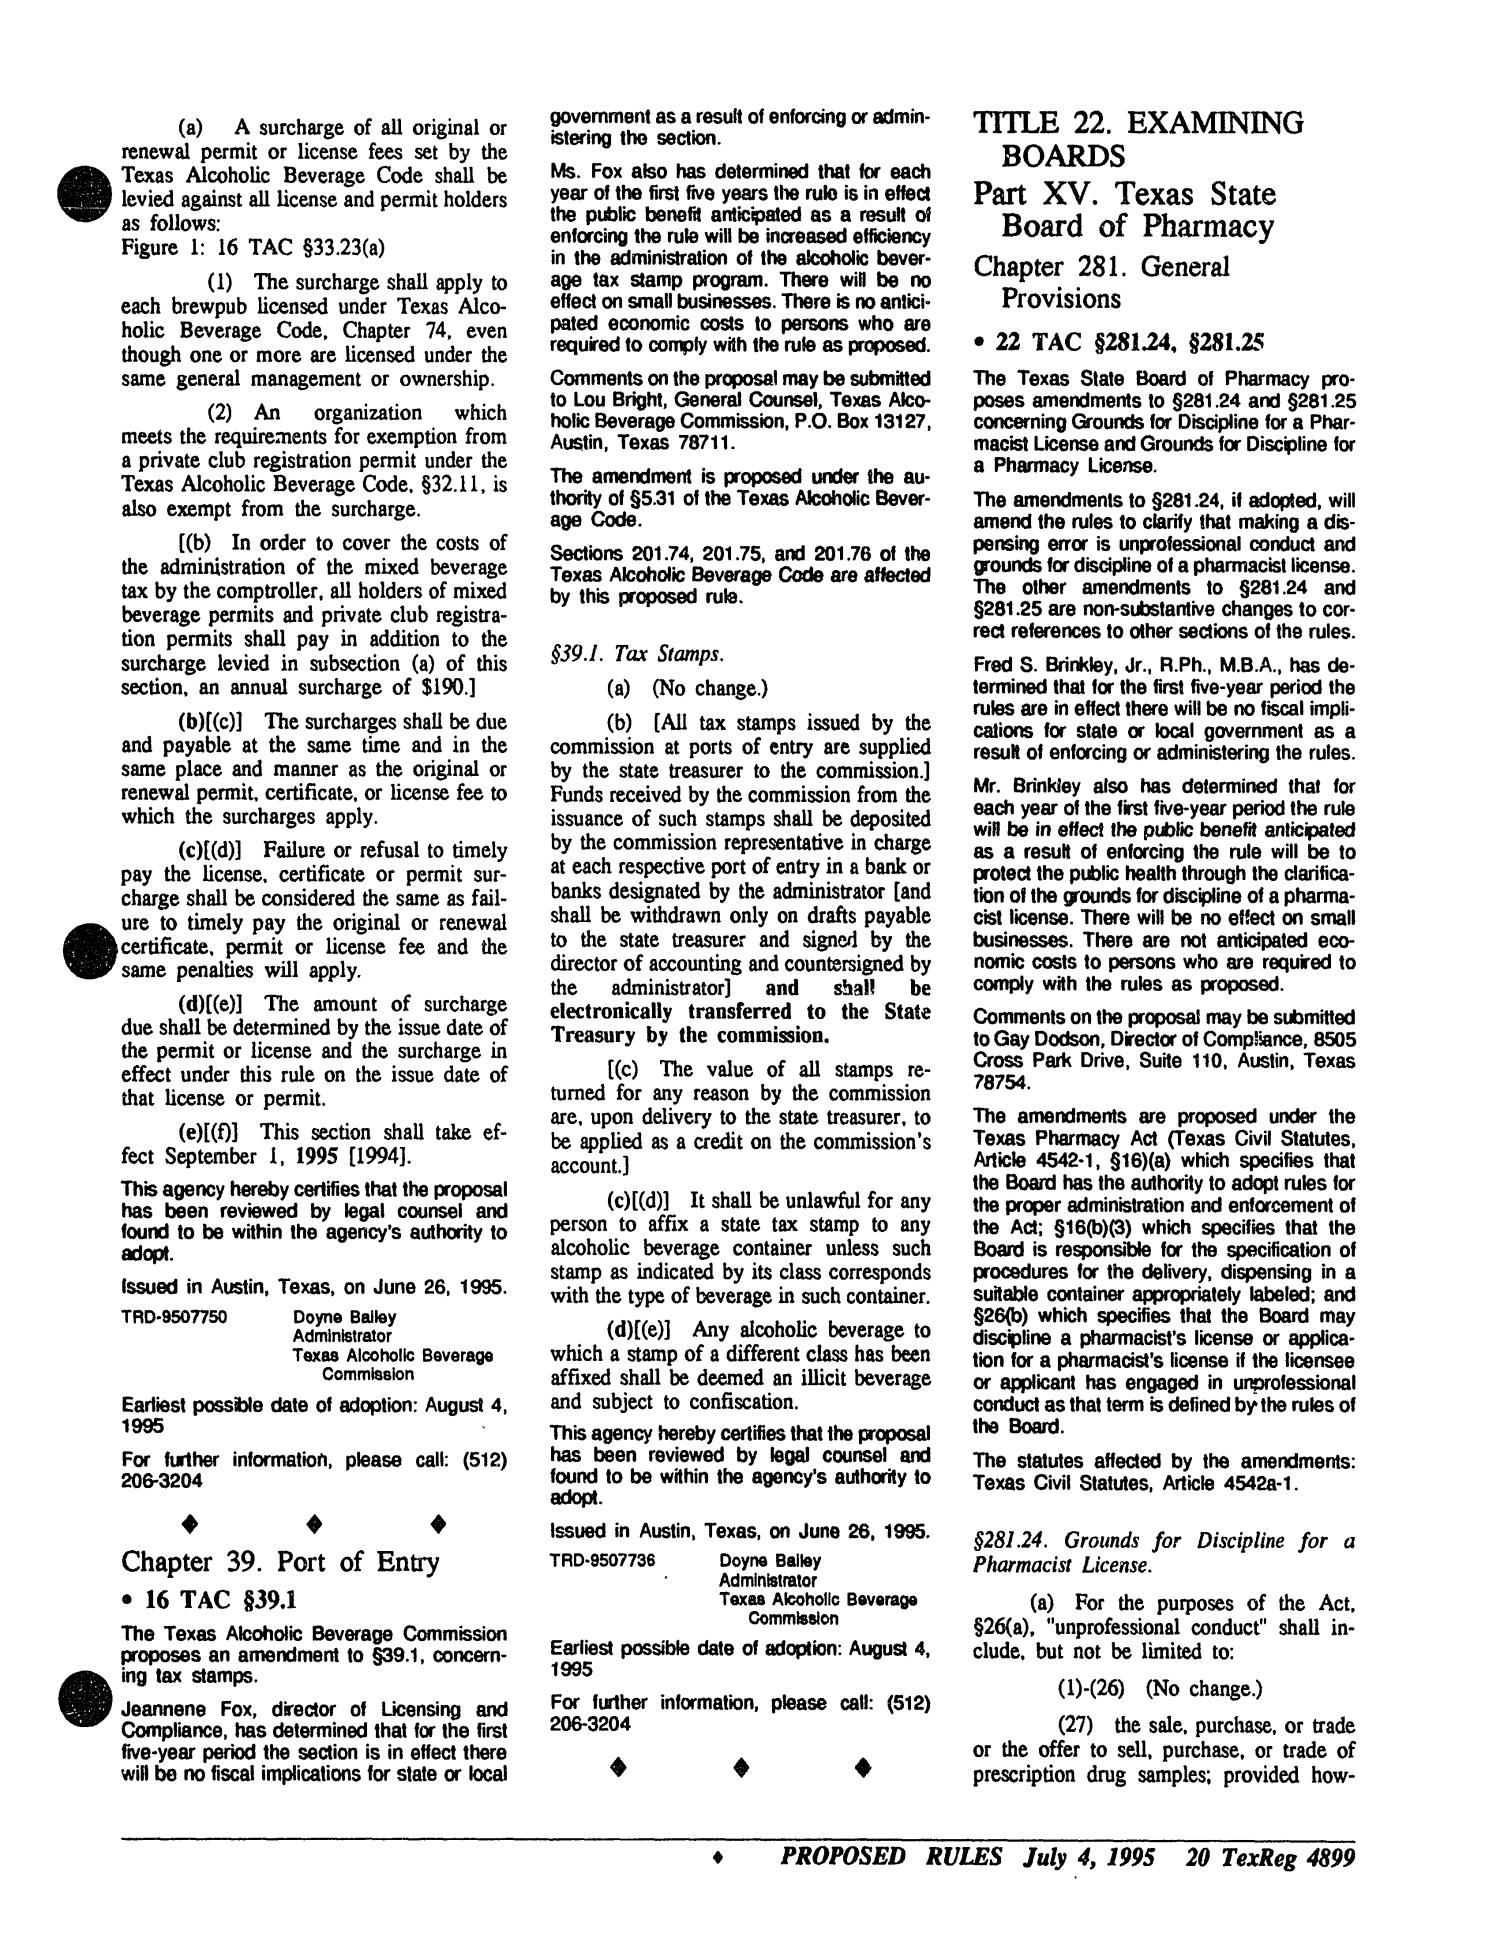 Texas Register, Volume 20, Number 51, Pages 4883-4959, July 4, 1995
                                                
                                                    4899
                                                